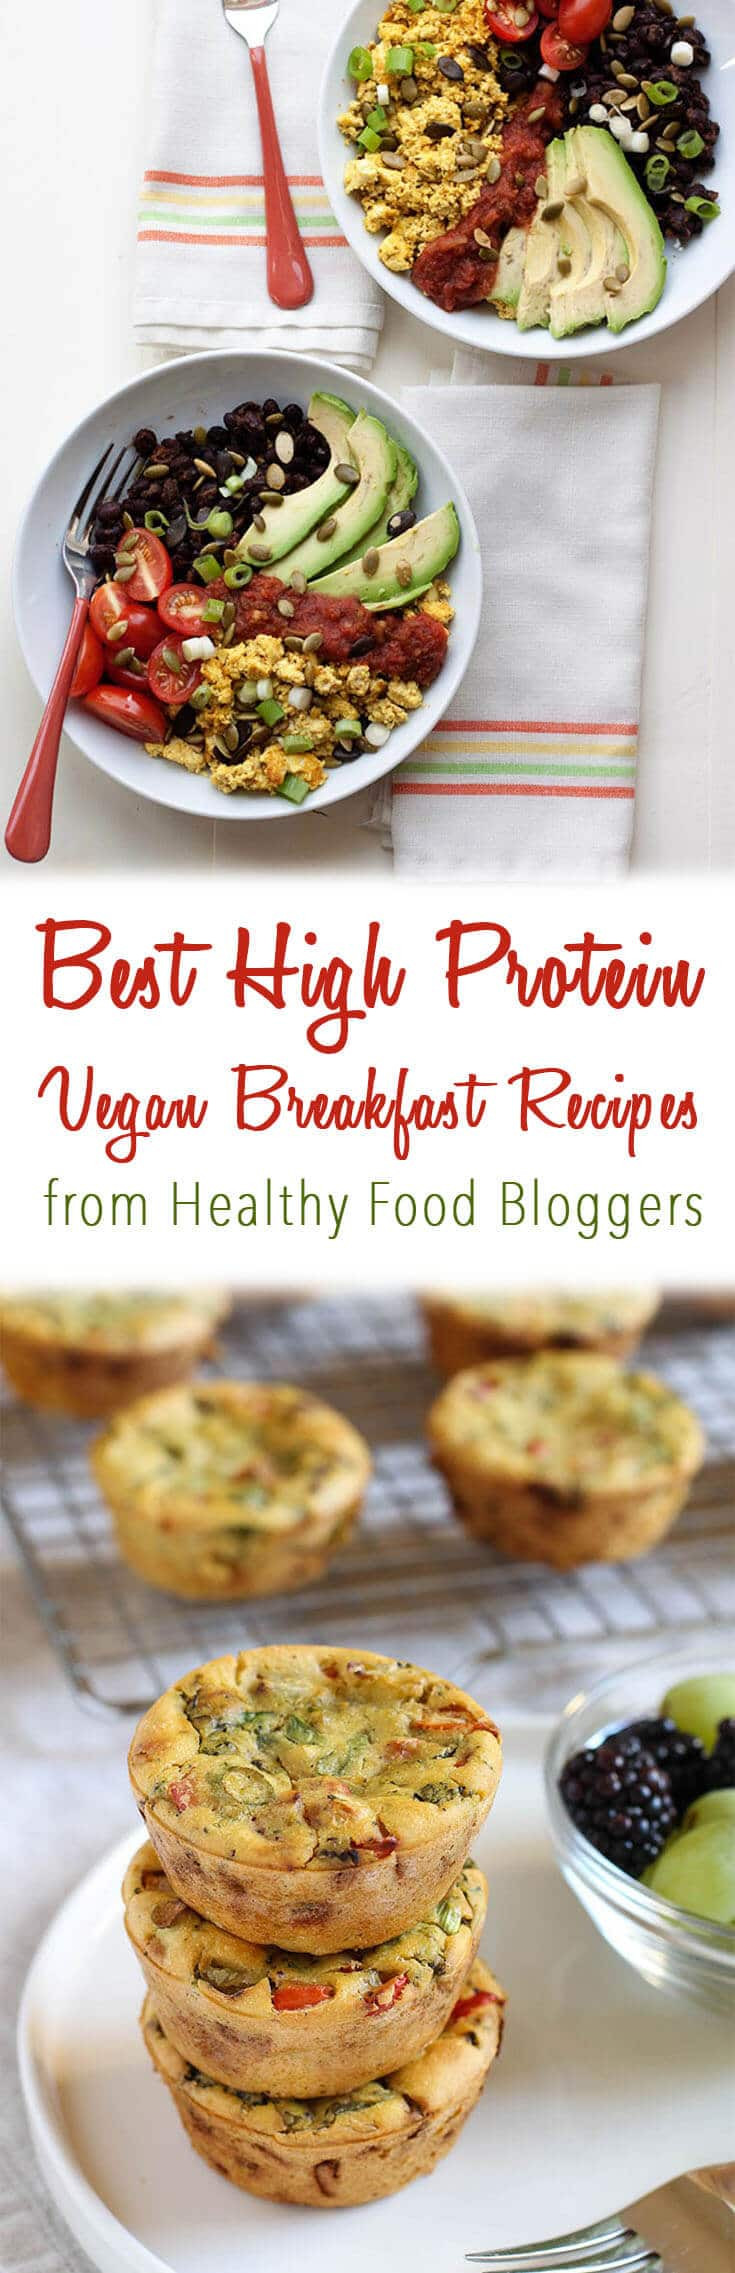 Vegetarian Protein Breakfast
 Best High Protein Vegan Breakfast Recipes from Healthy